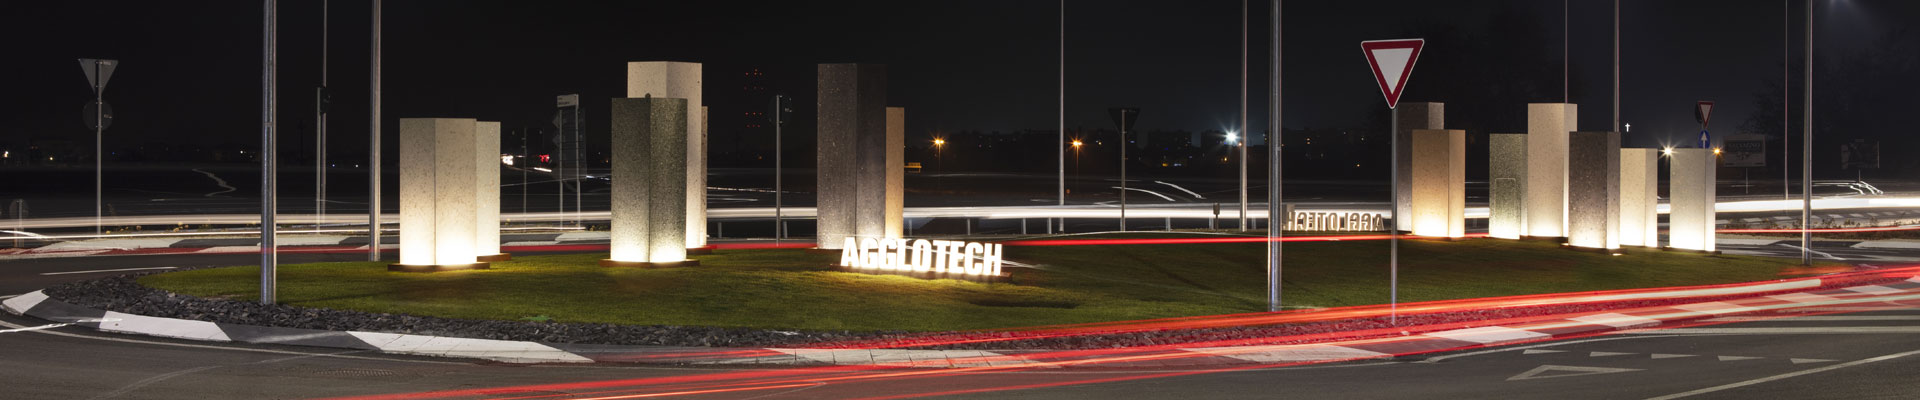 agglotech-news-rotonda-header